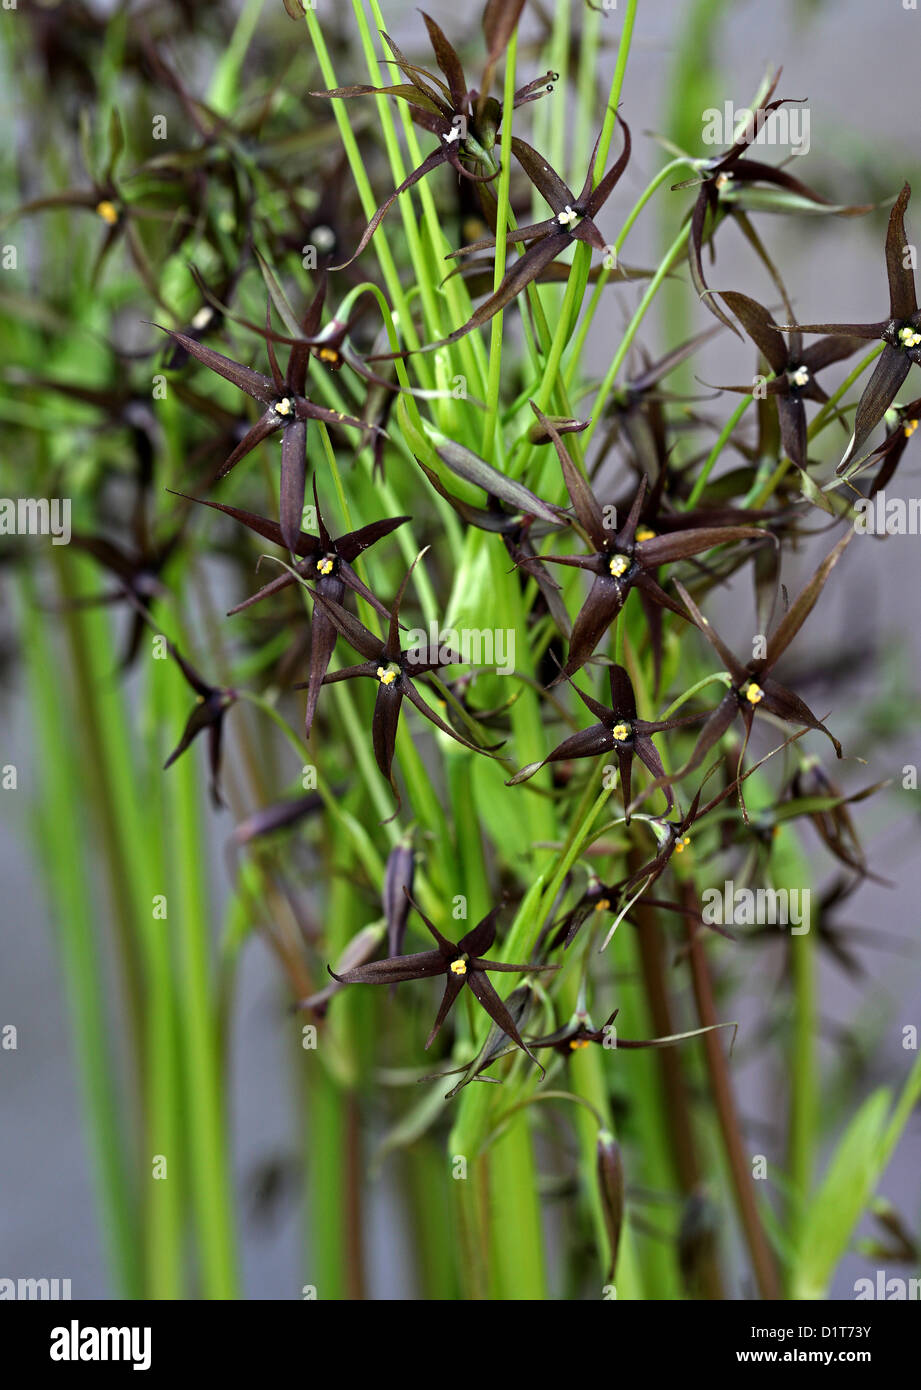 Gethyum atropurpureum, Alliaceae. syn. Solaria atropurpurea. Northern Chile, South America. Stock Photo